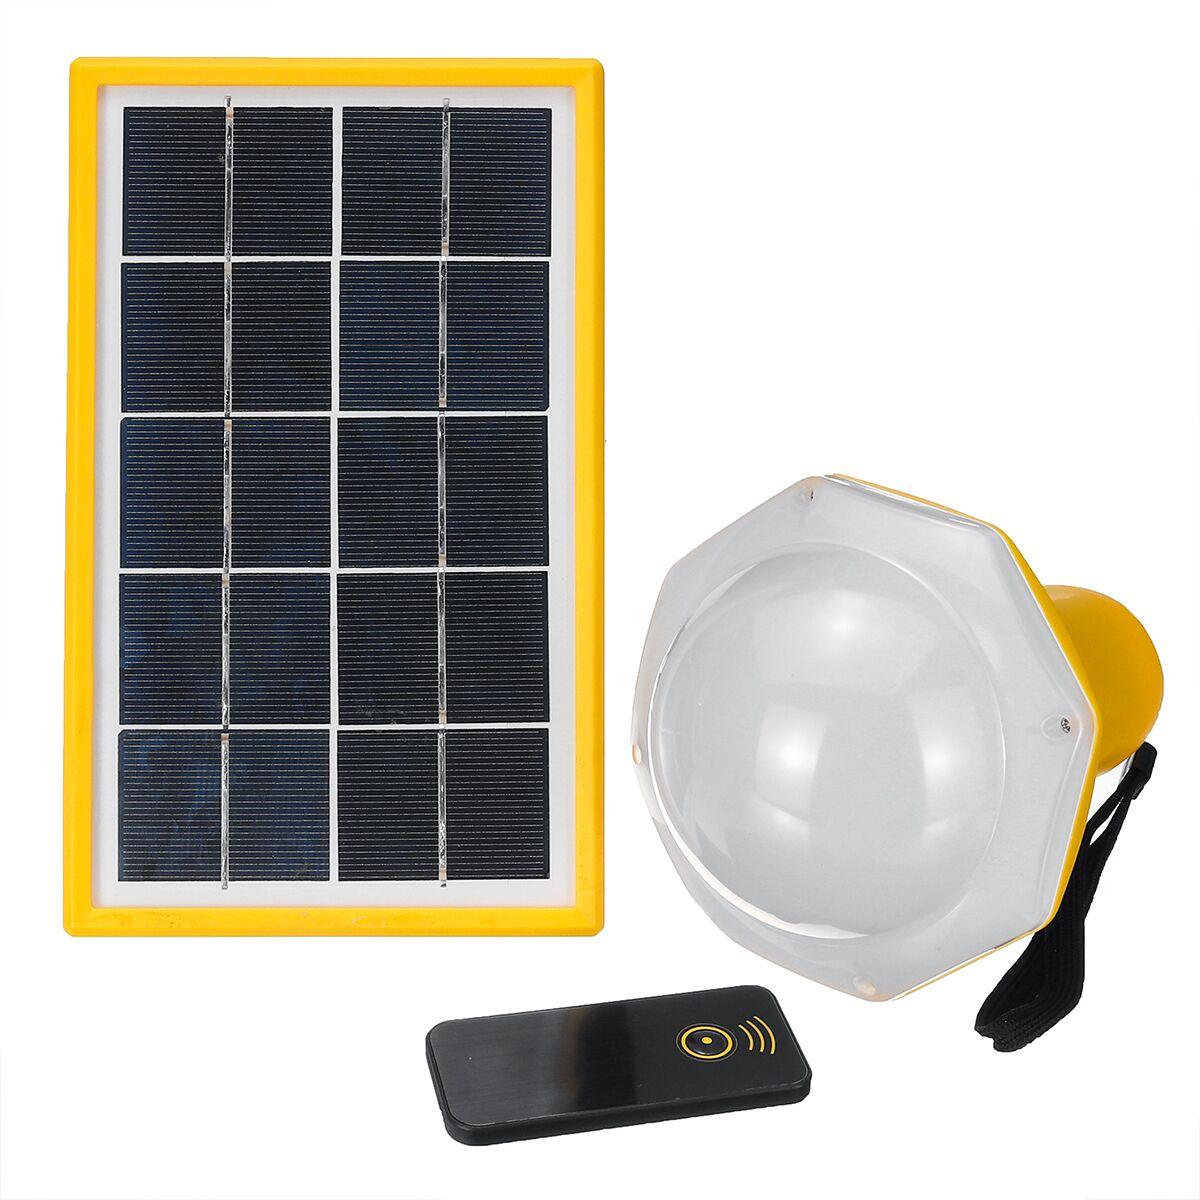 200LM Solar Panel Lamp macht 5 Modi DC Verlichting Systeem Kits Emergency Generator Met Afstandsbediening Outdoor Camping